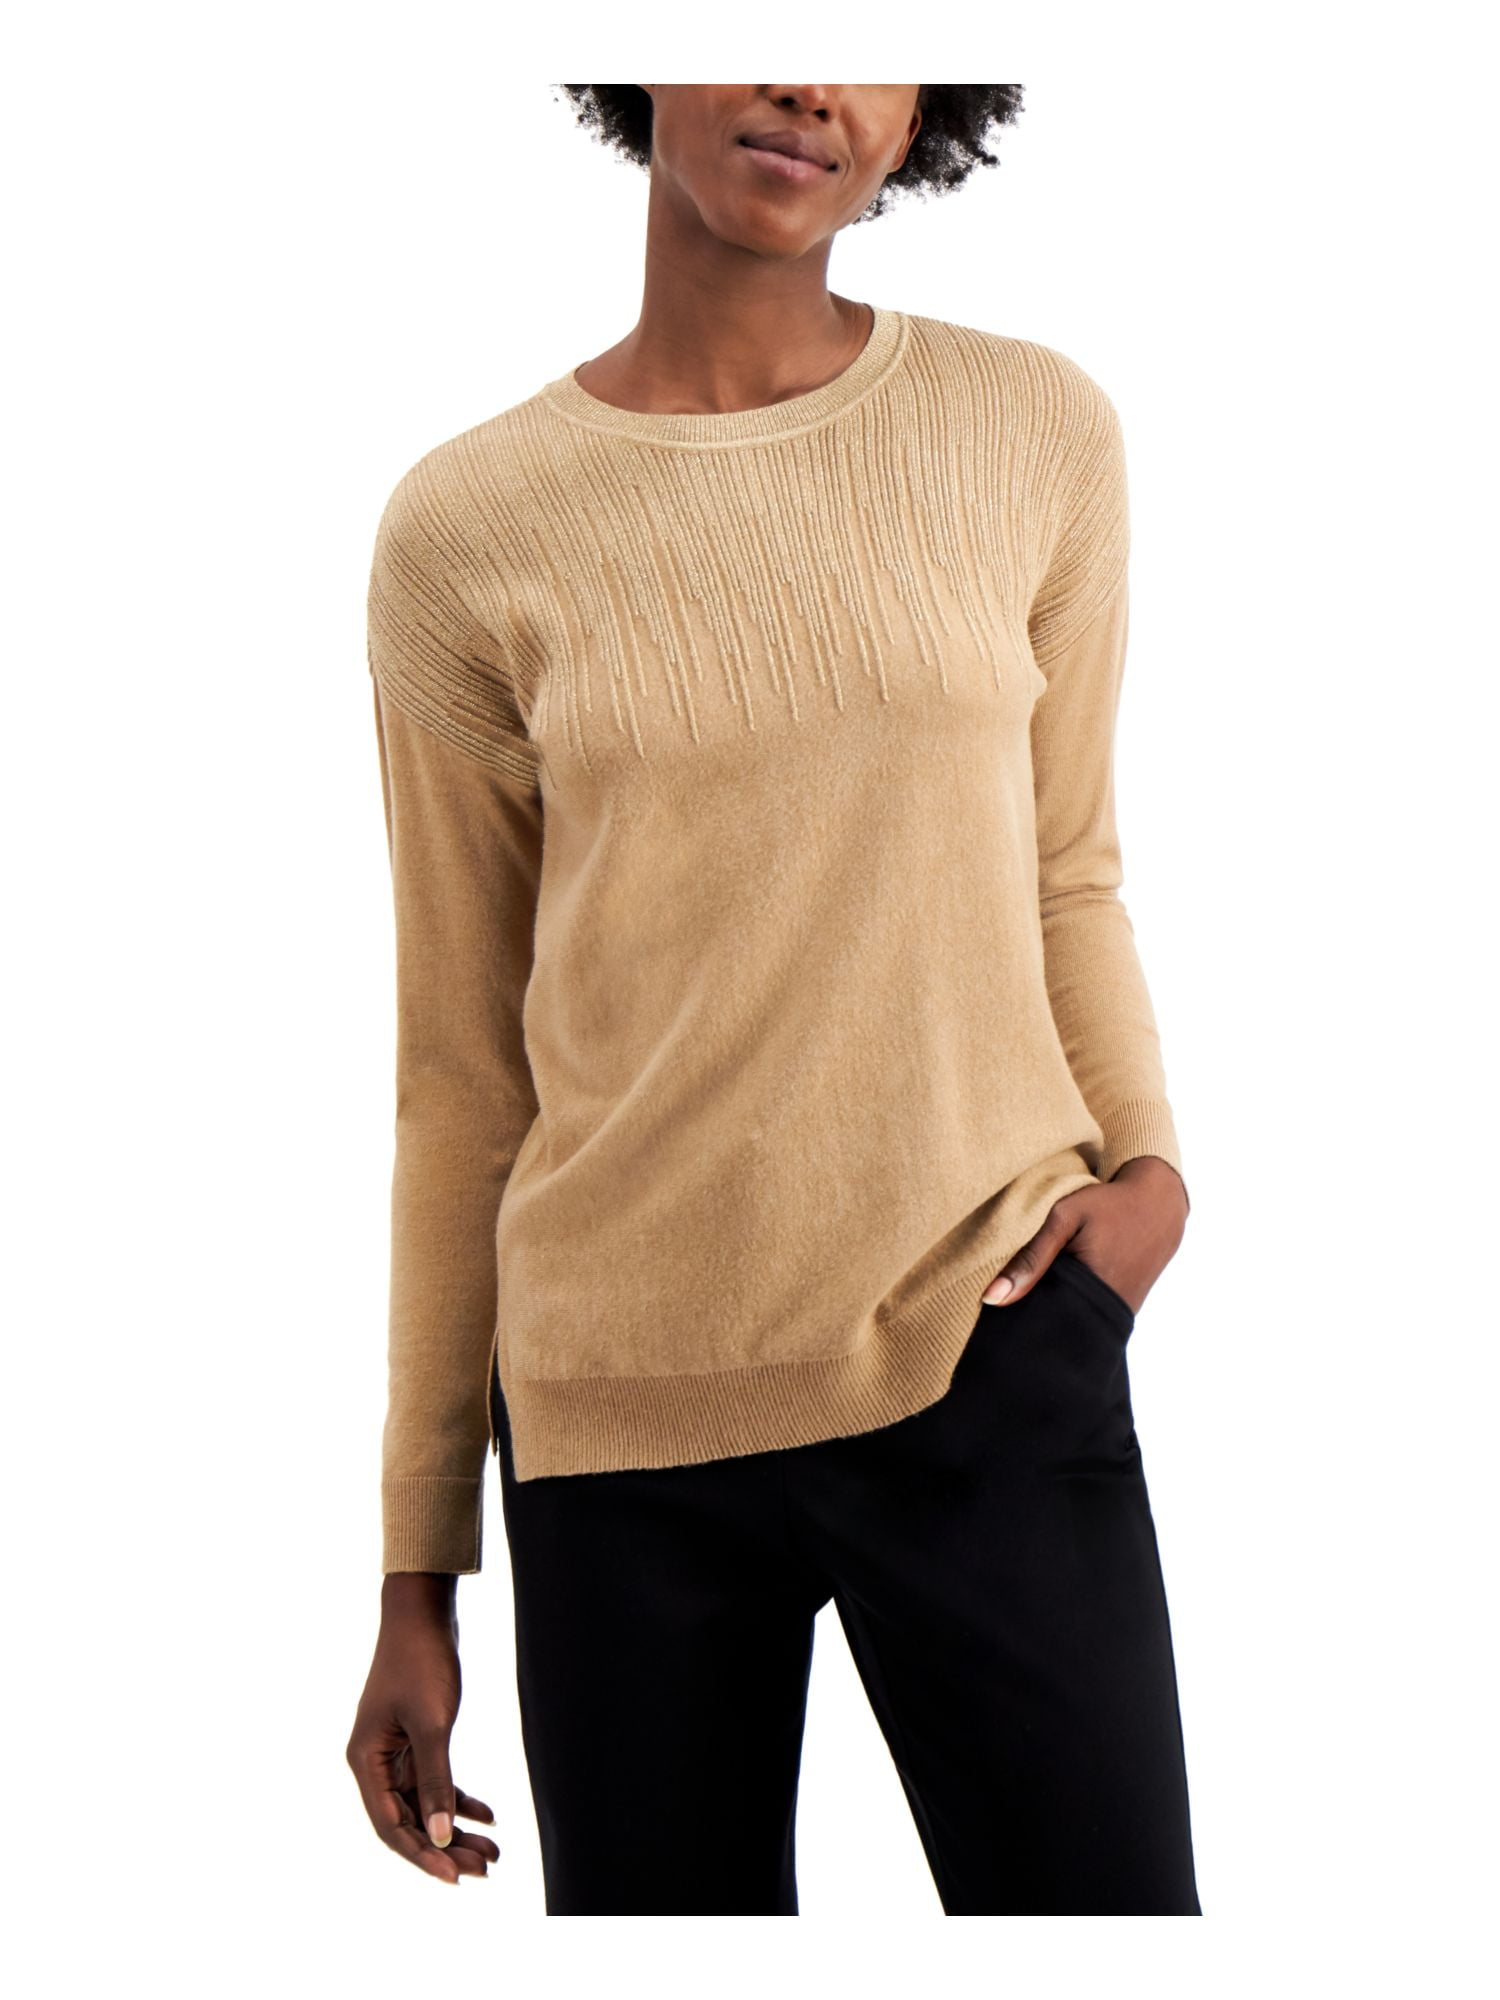 ALFANI Brown Pinstripe Long Sleeve Crew Neck Sweater - Walmart.com